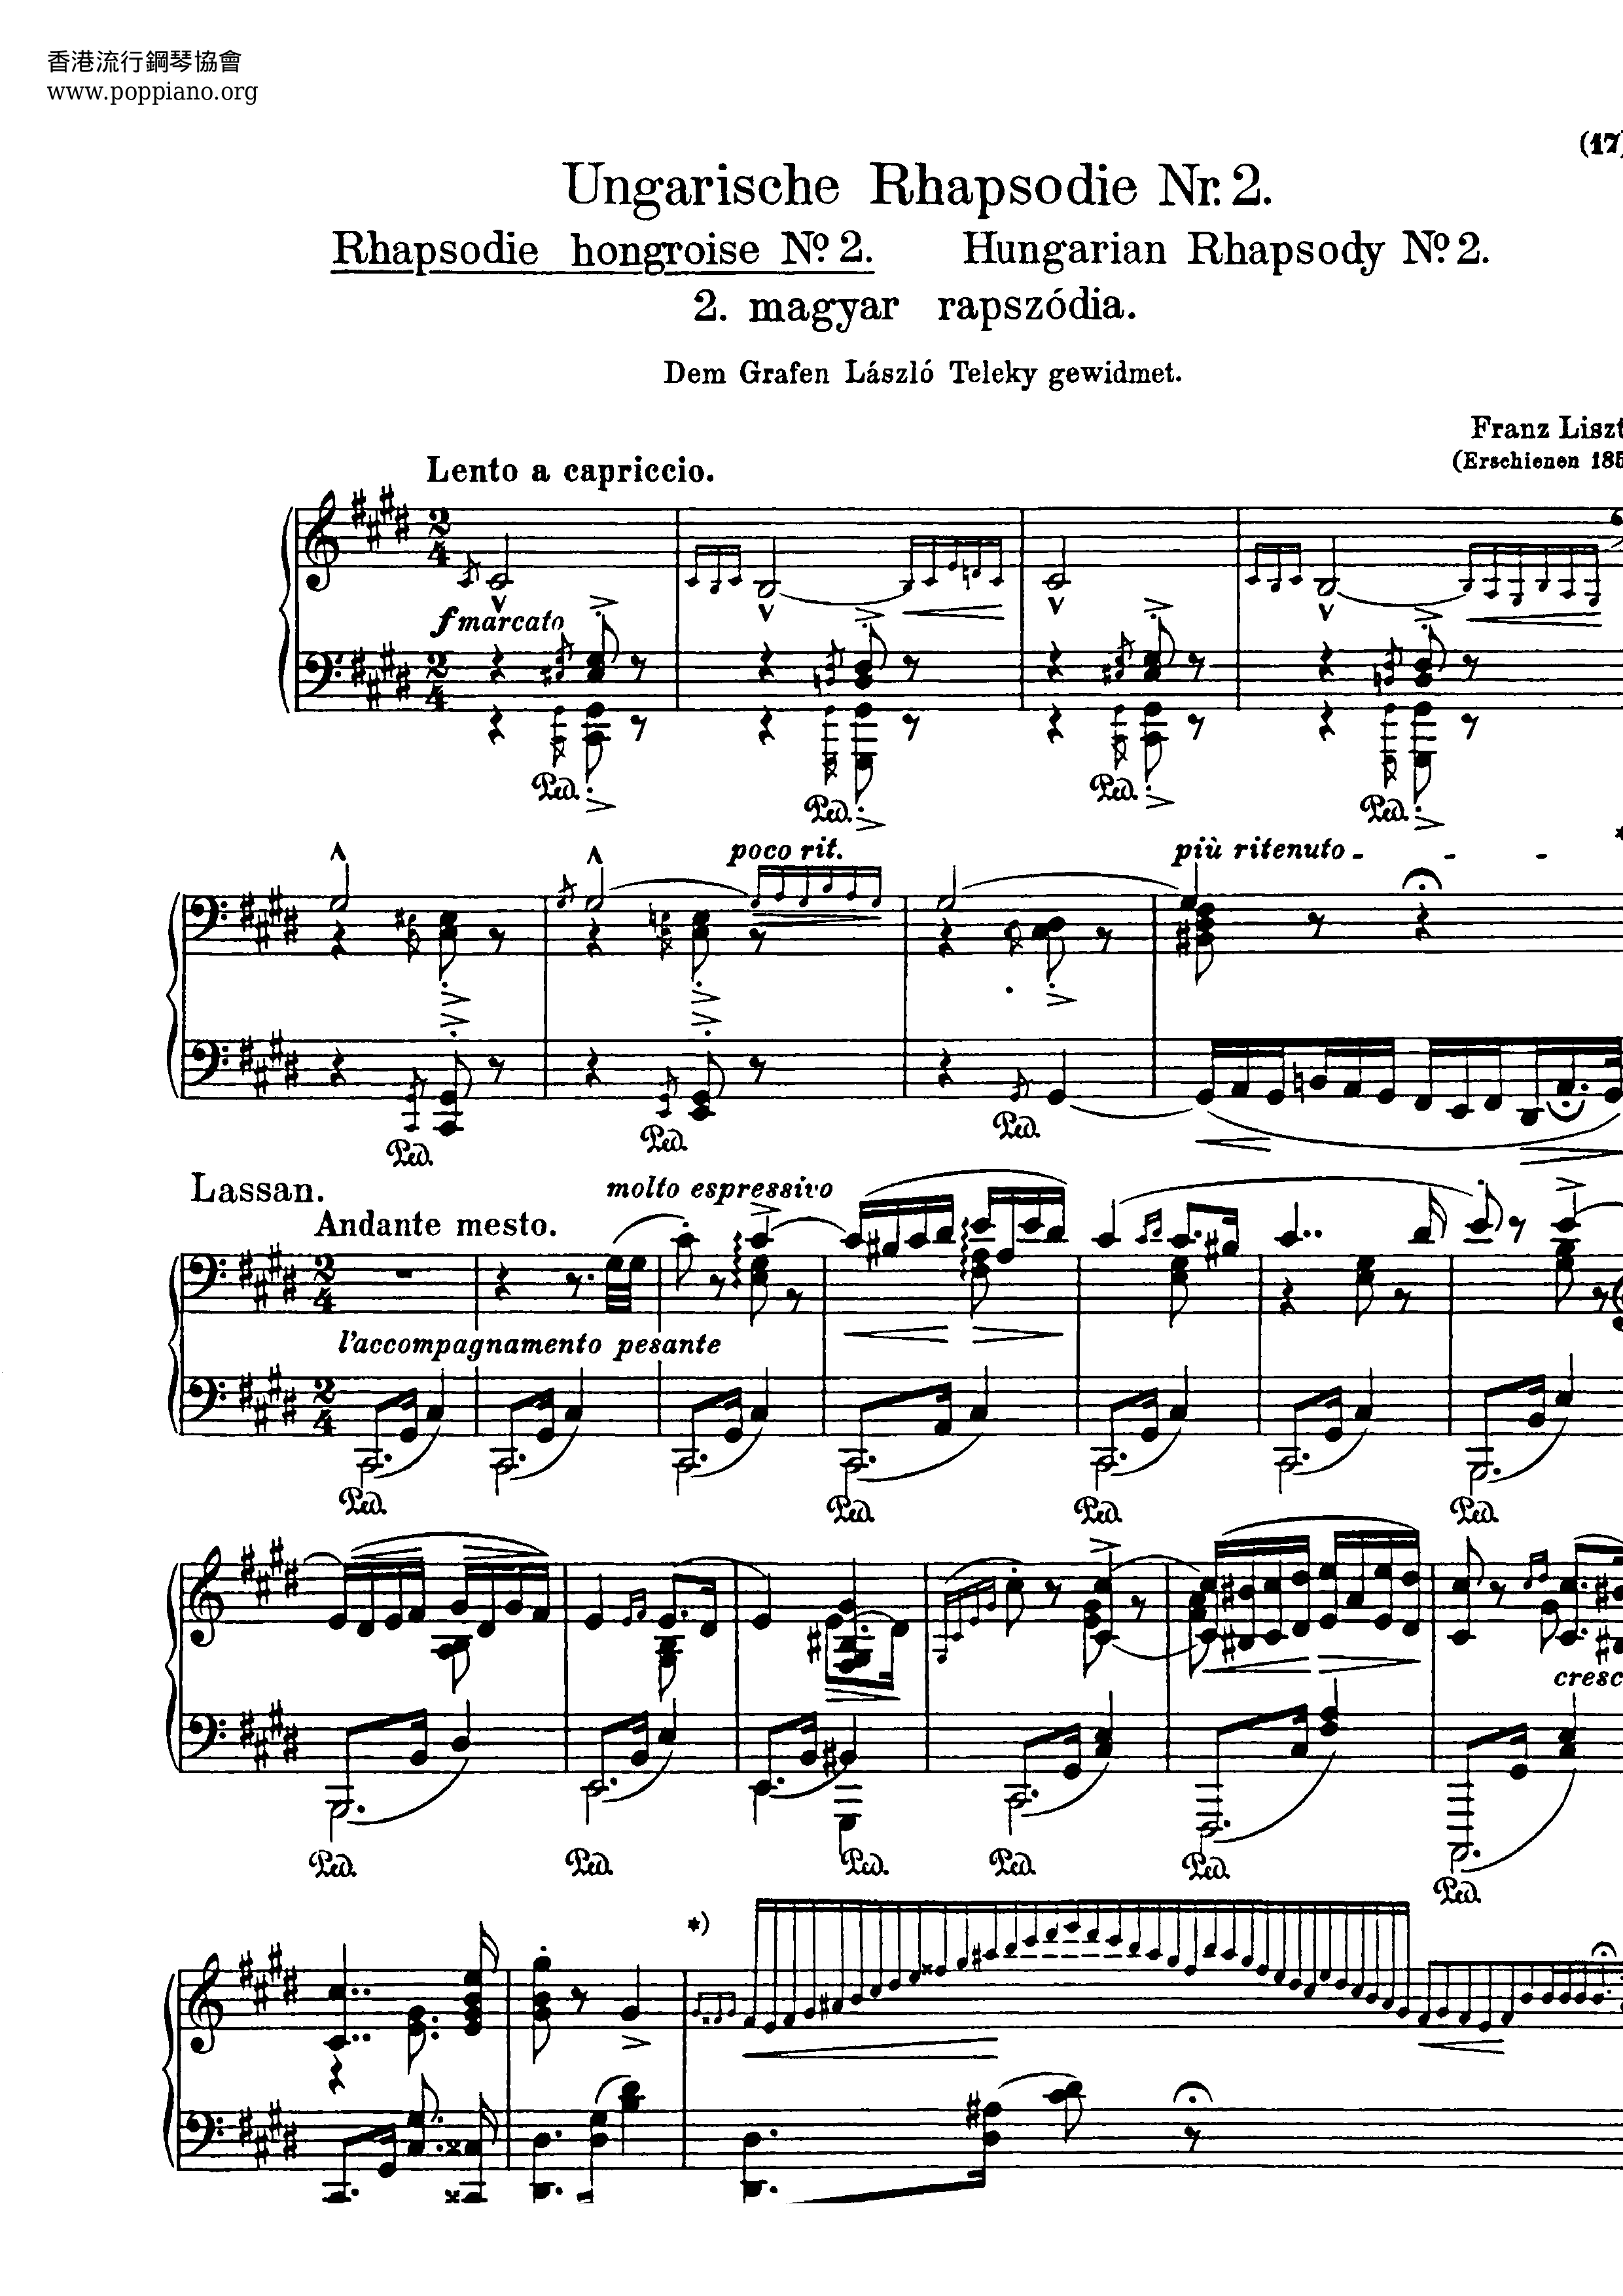 Hungarian Rhapsody No.2, S.244/2琴谱